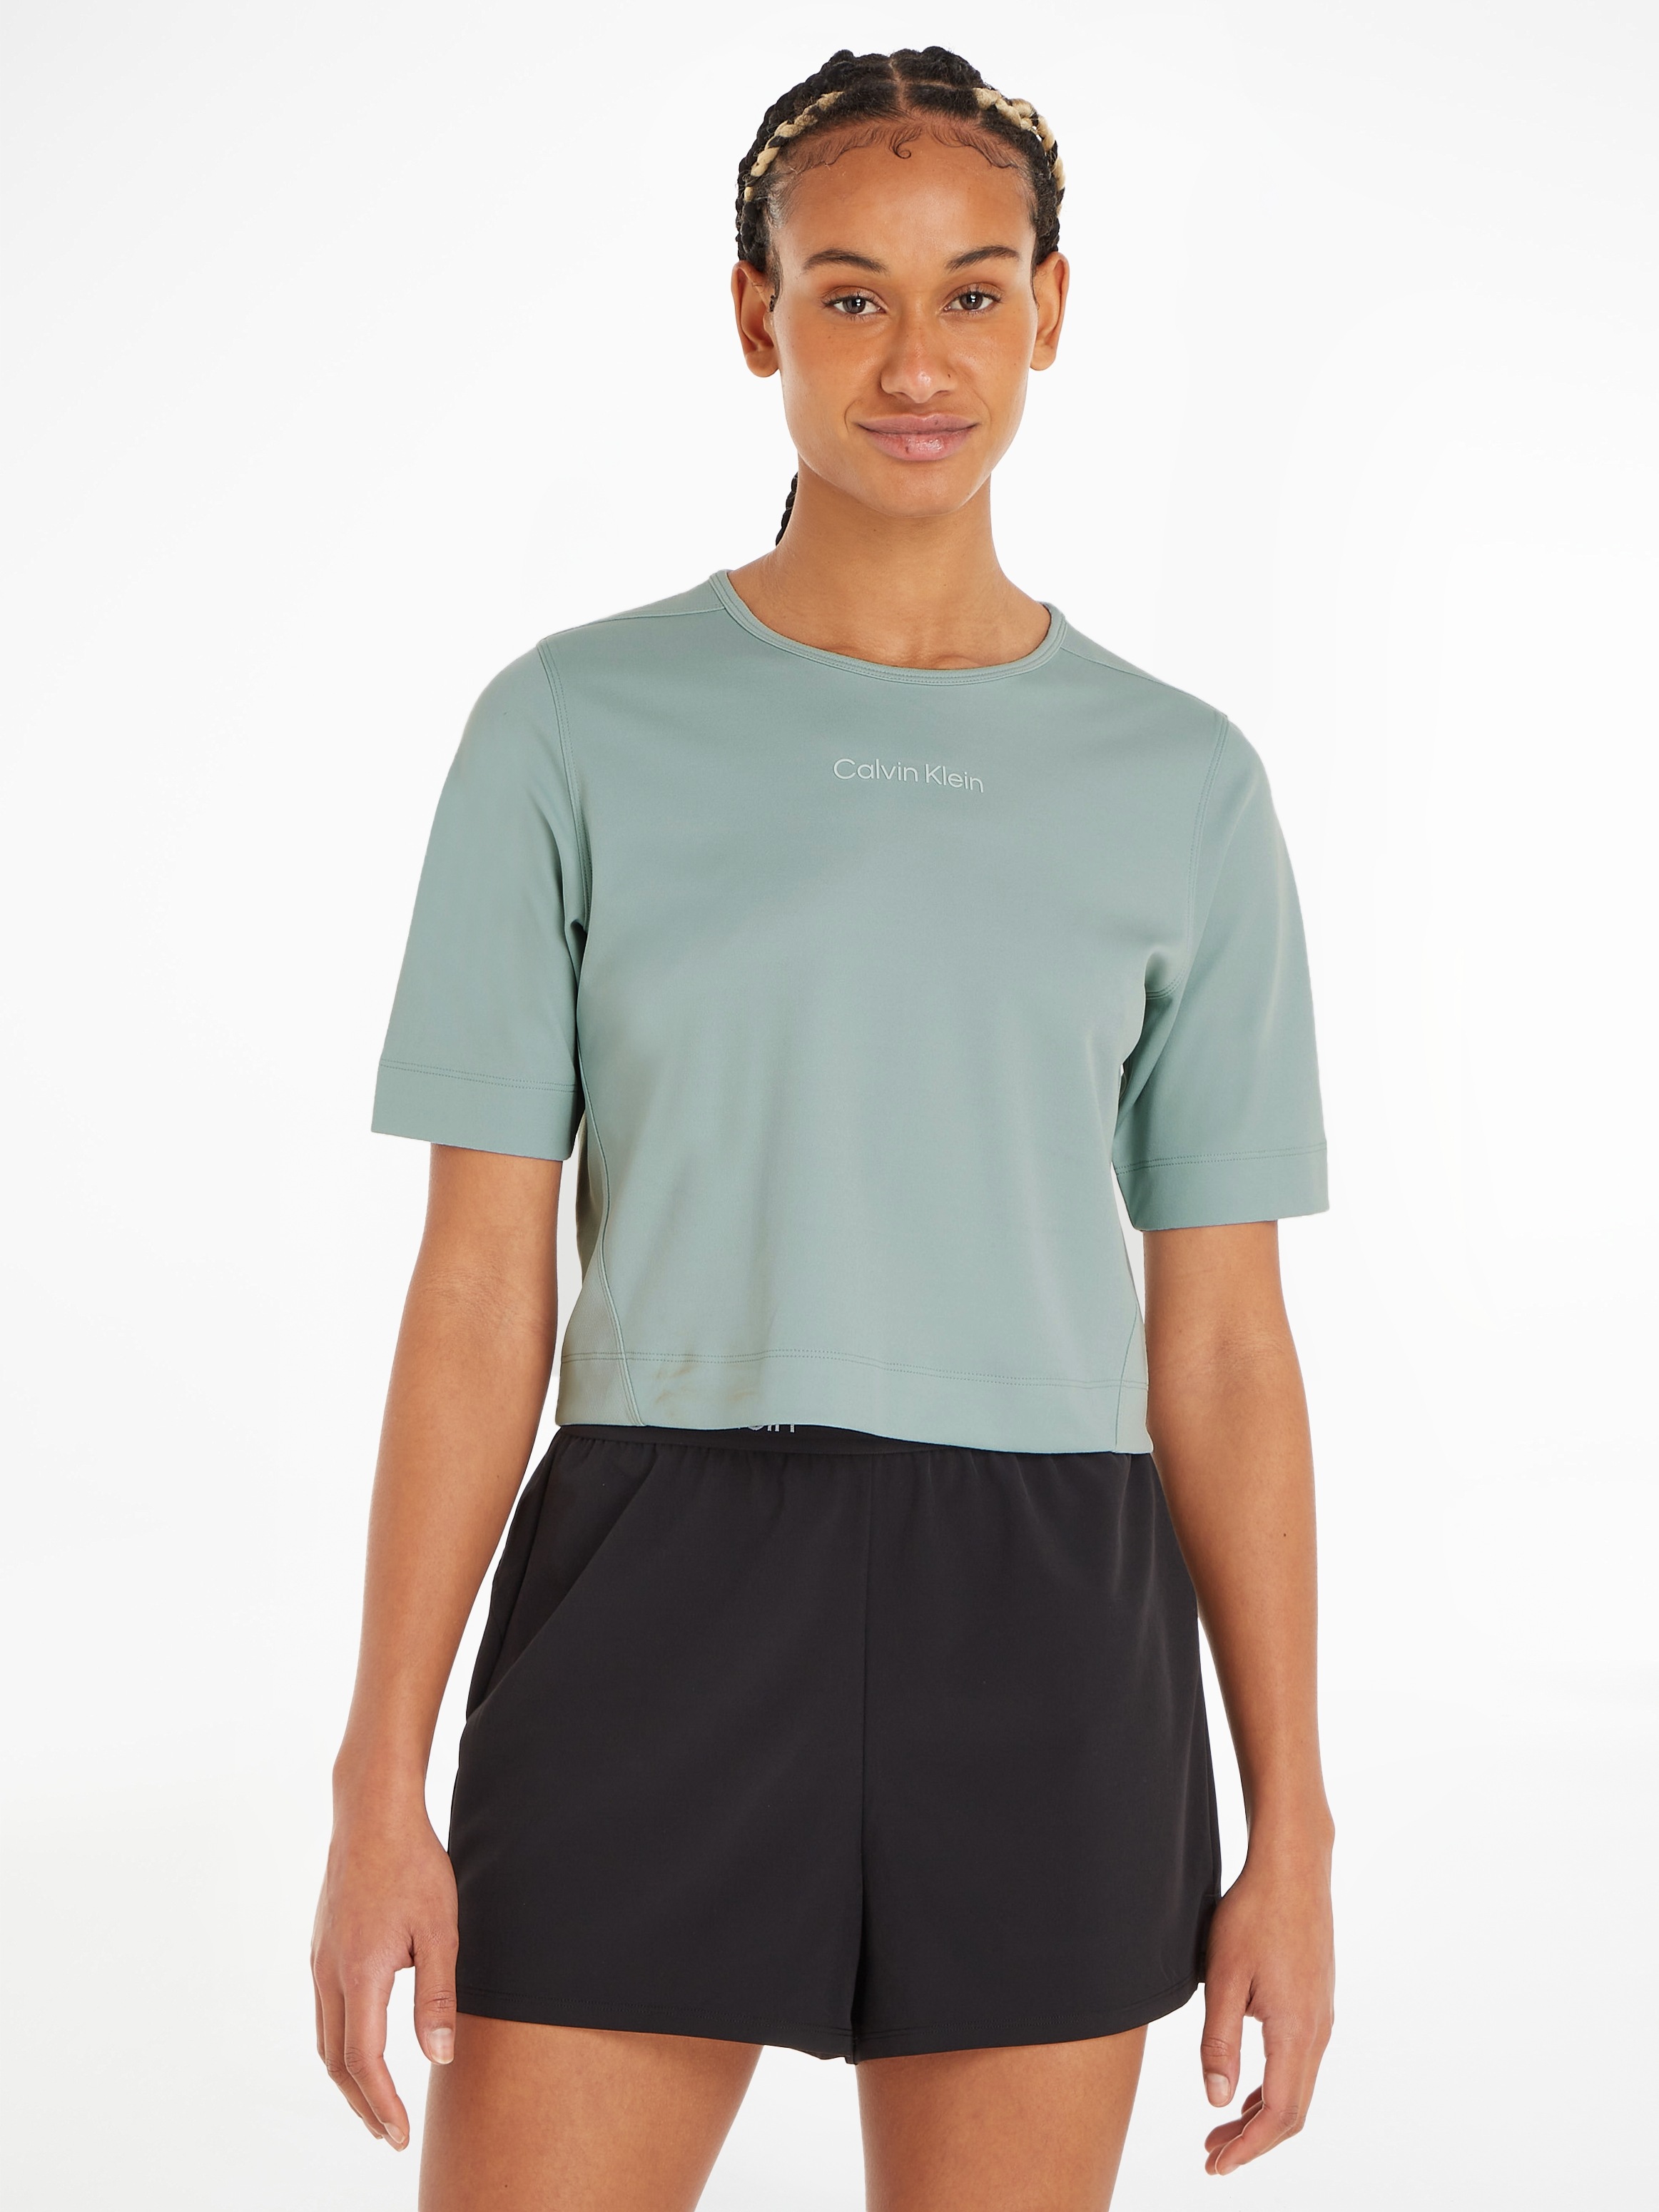 Calvin Klein Sport T-Shirt bei OTTOversand